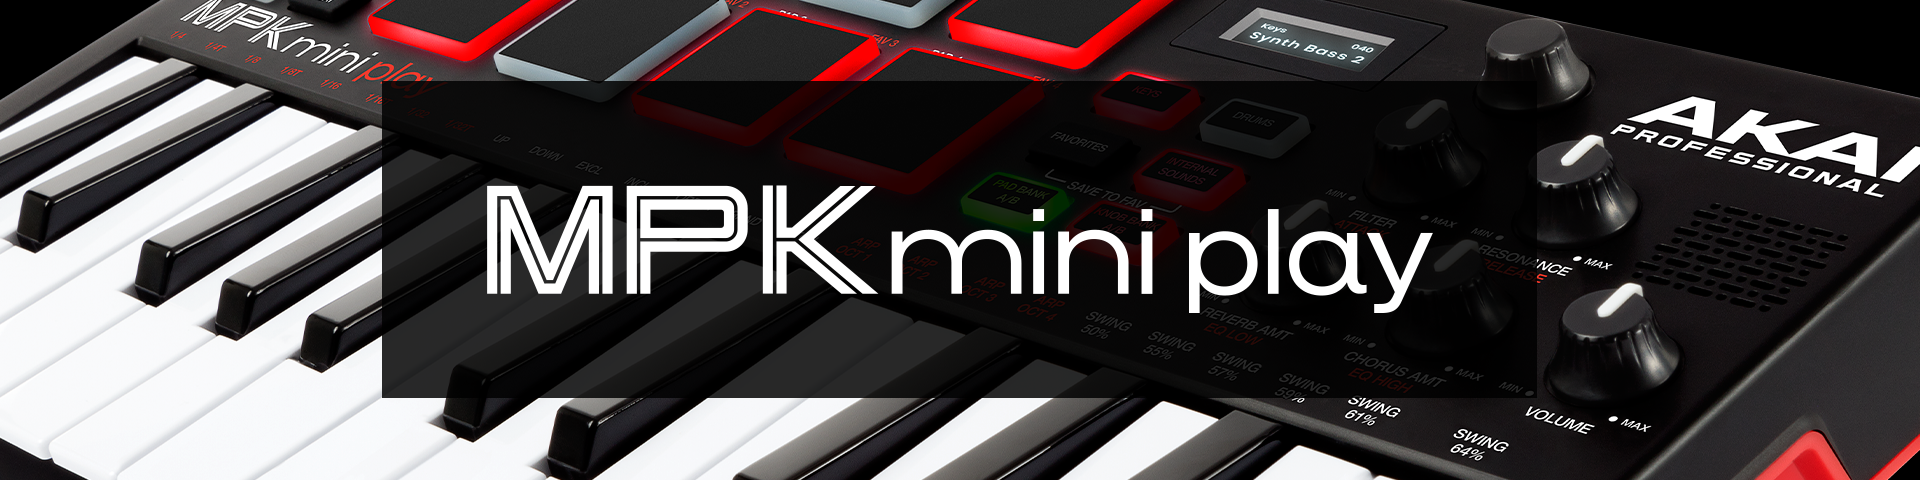 Akai Professional MPK Mini Play Compact Keyboard and Pad Controller with Integ 